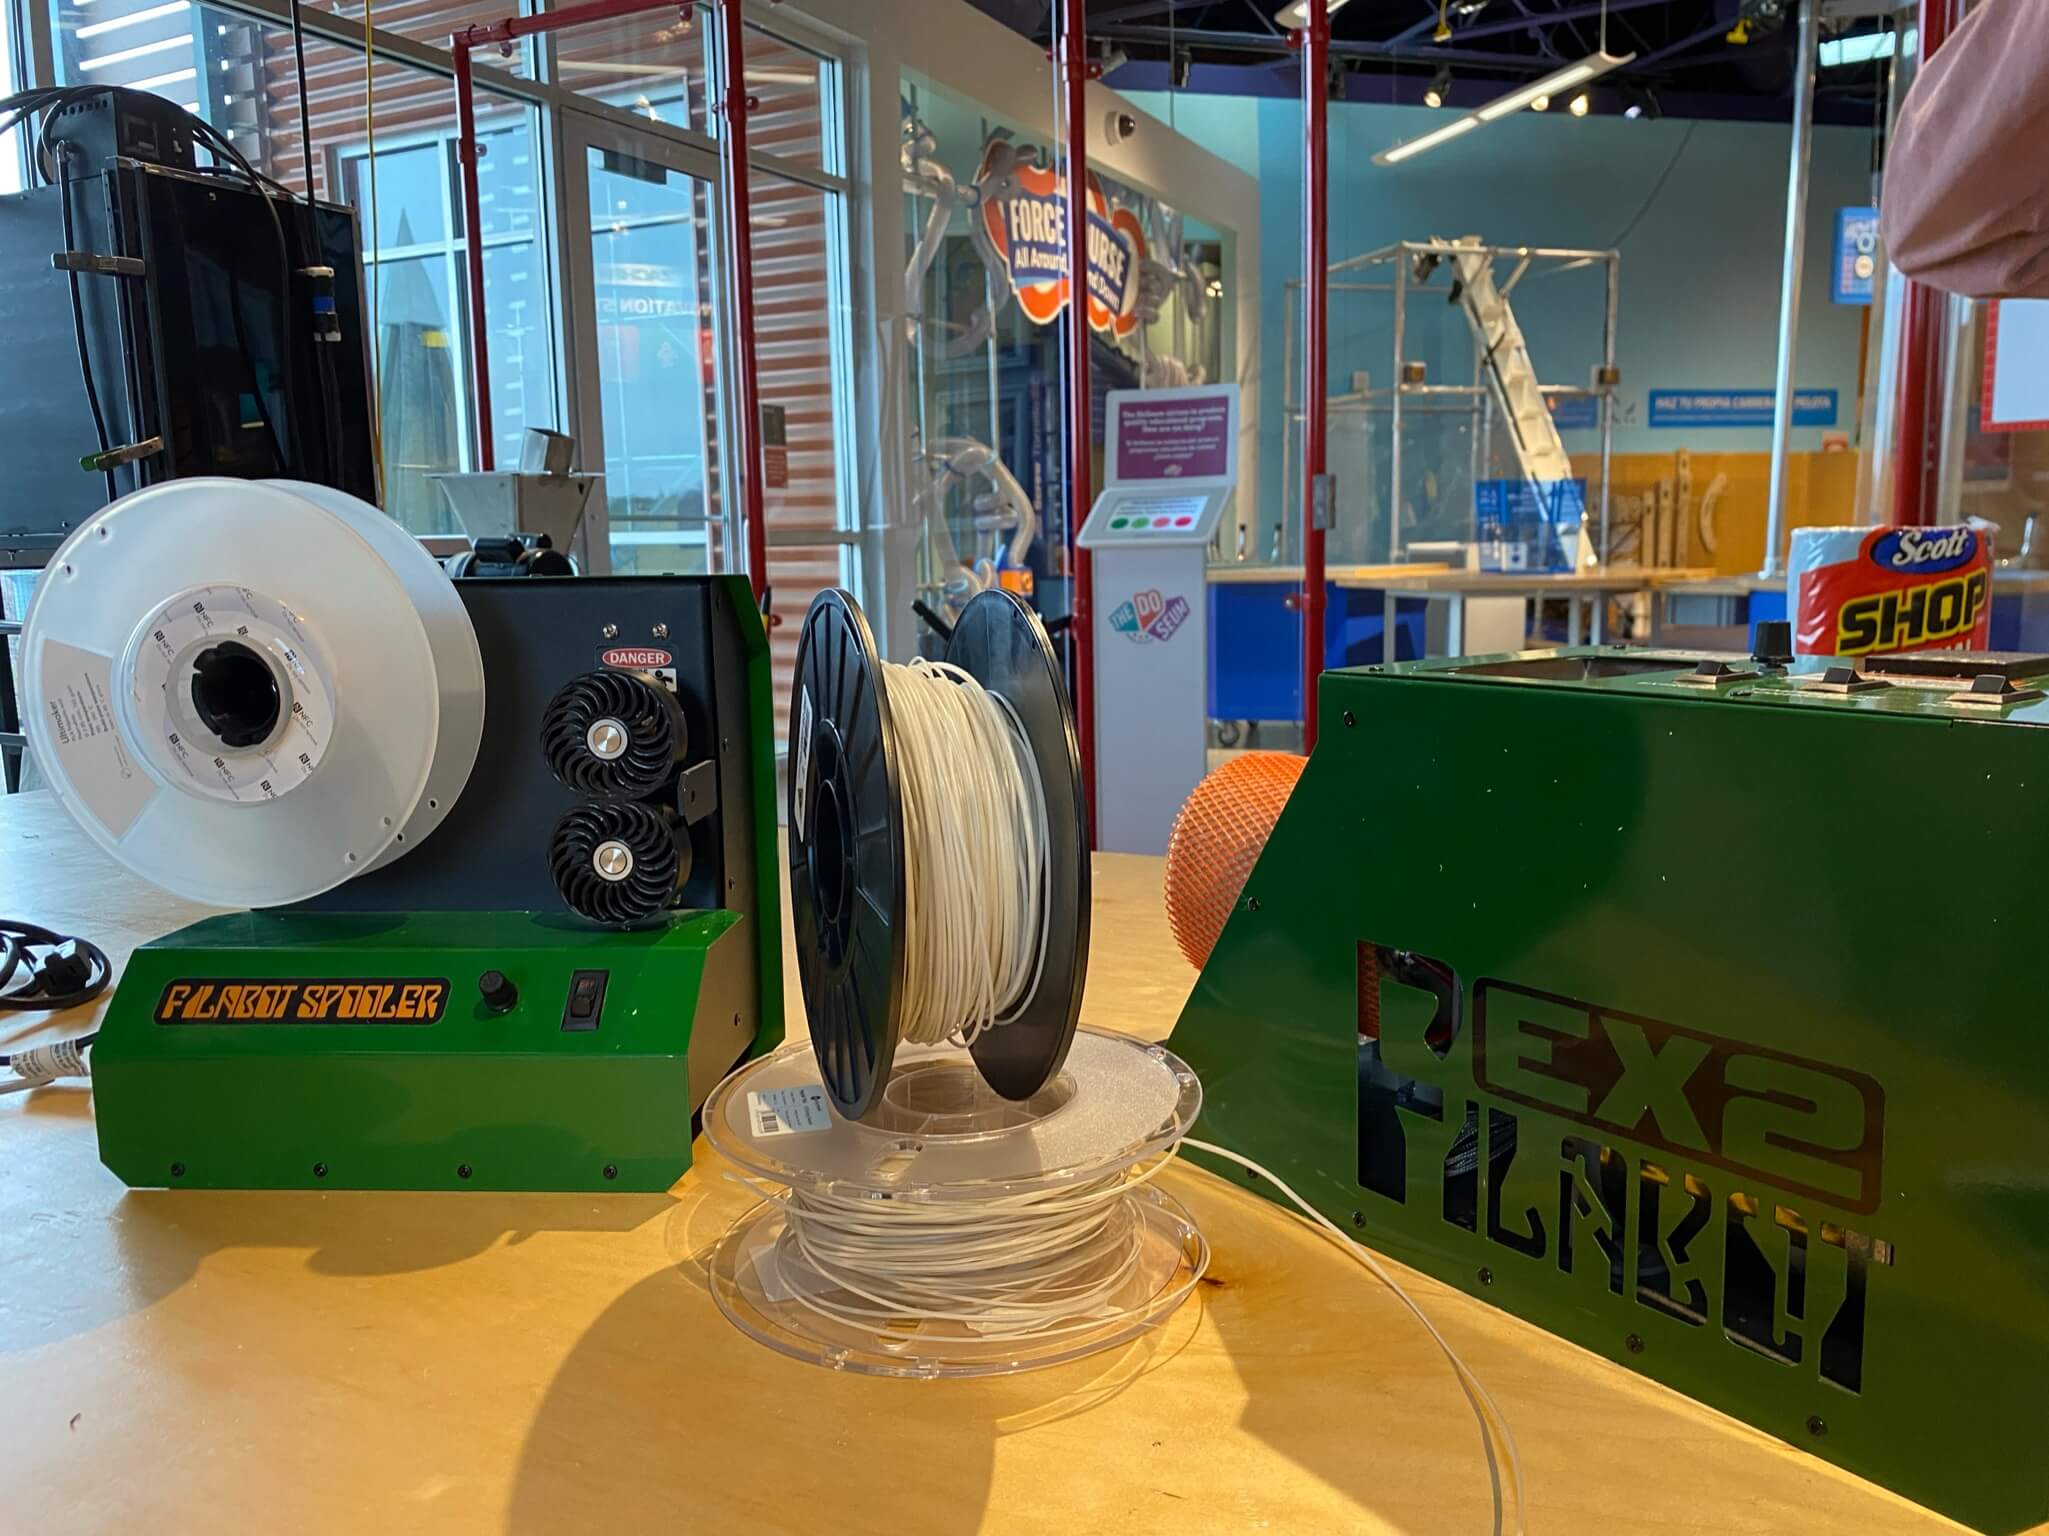 Spool of filament